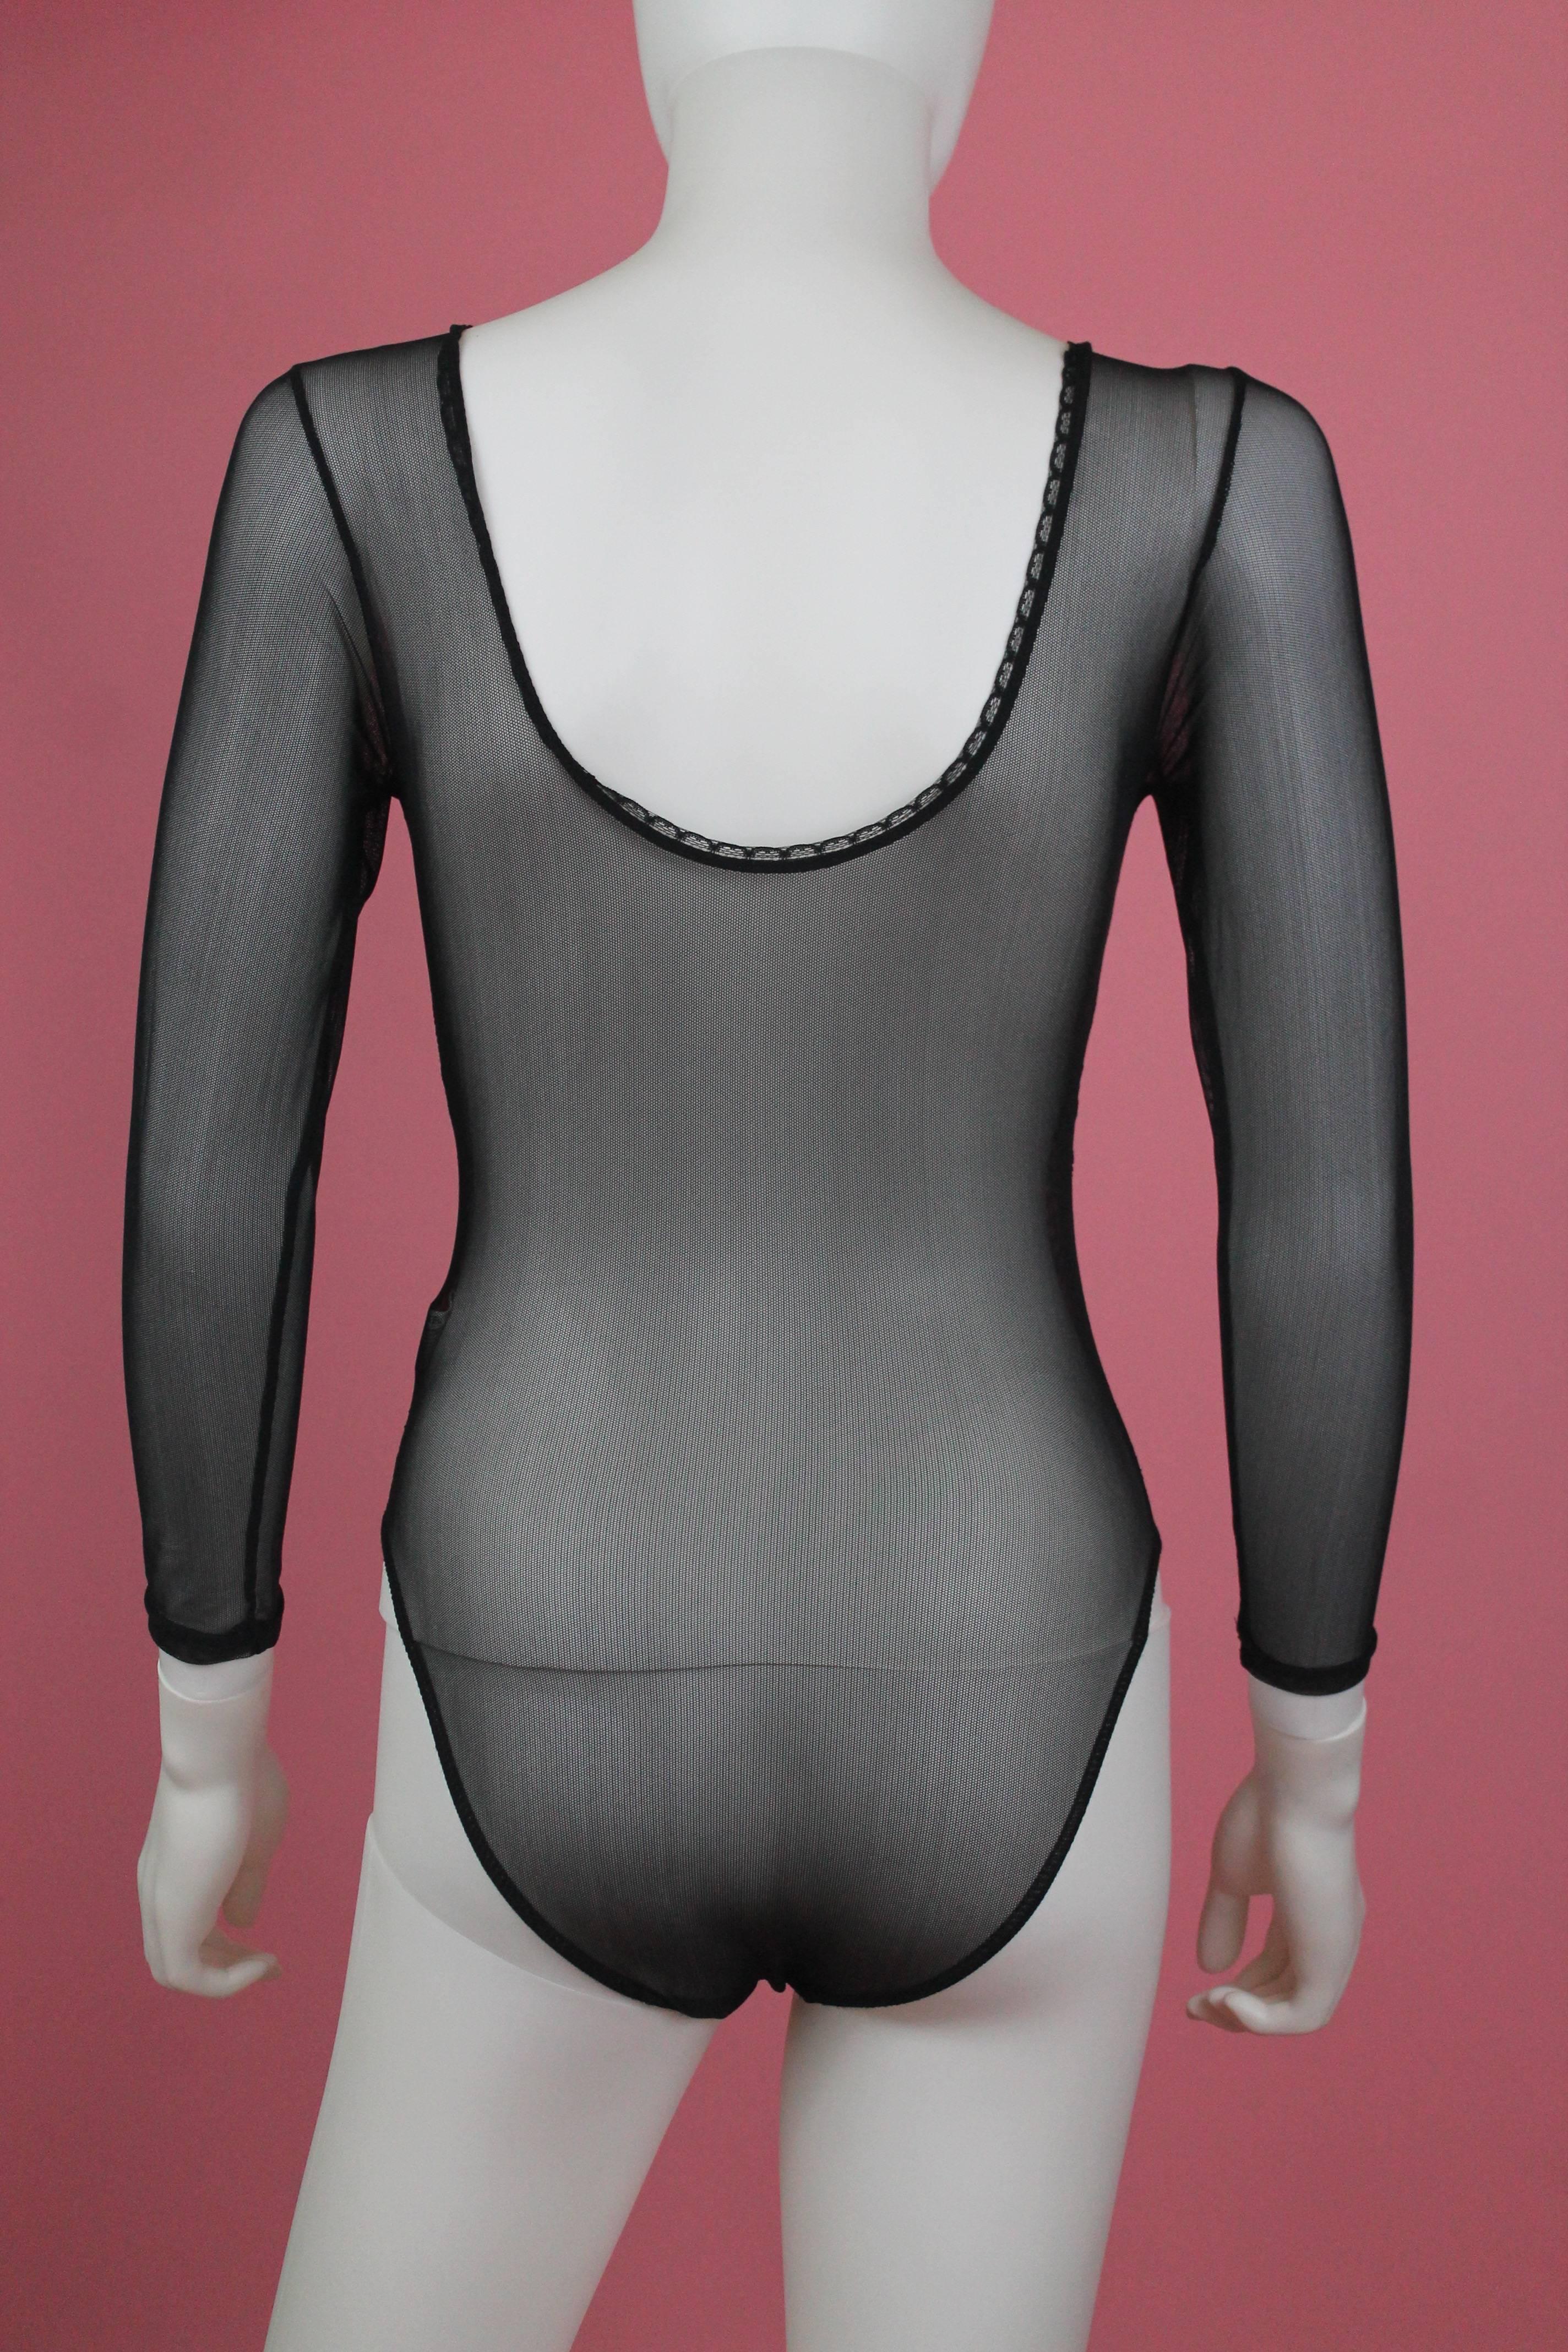 Gray Vivienne Westwood Sheer Bodysuit from 1992, Portrait Collection Motif, Size M